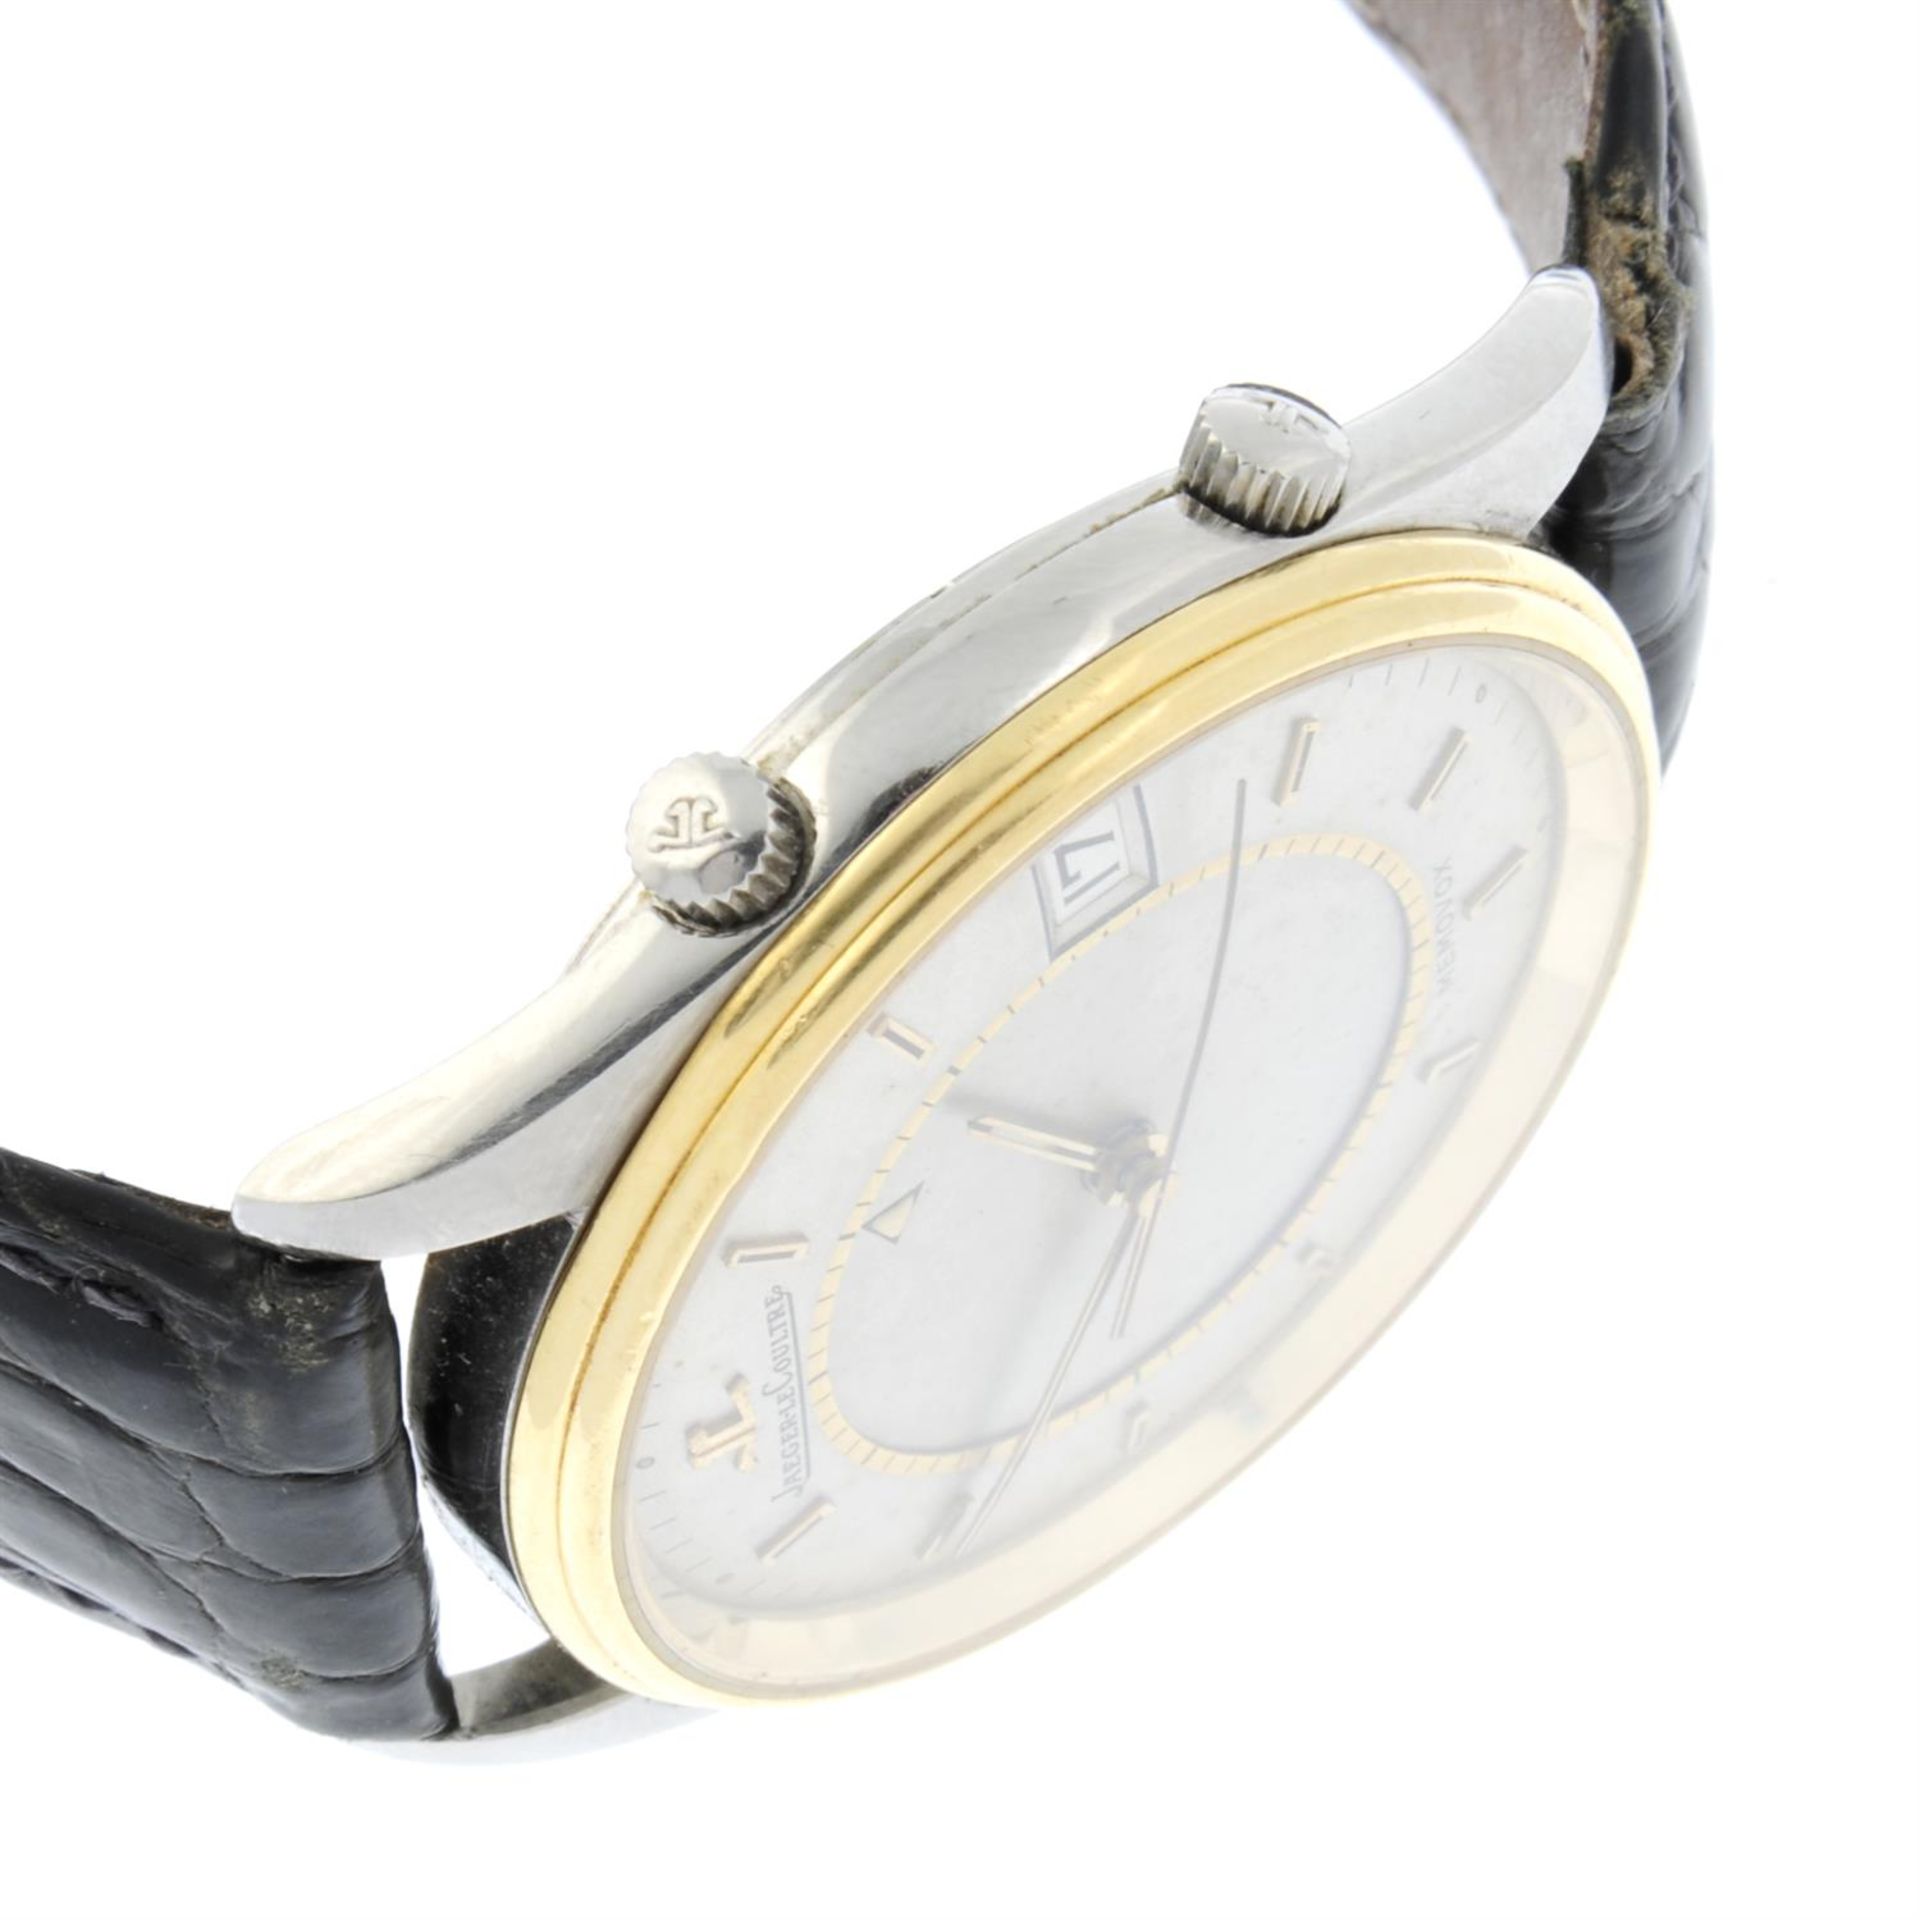 JAEGER-LECOULTRE - a bi-metal Memovox alarm wrist watch, 36mm. - Image 4 of 6